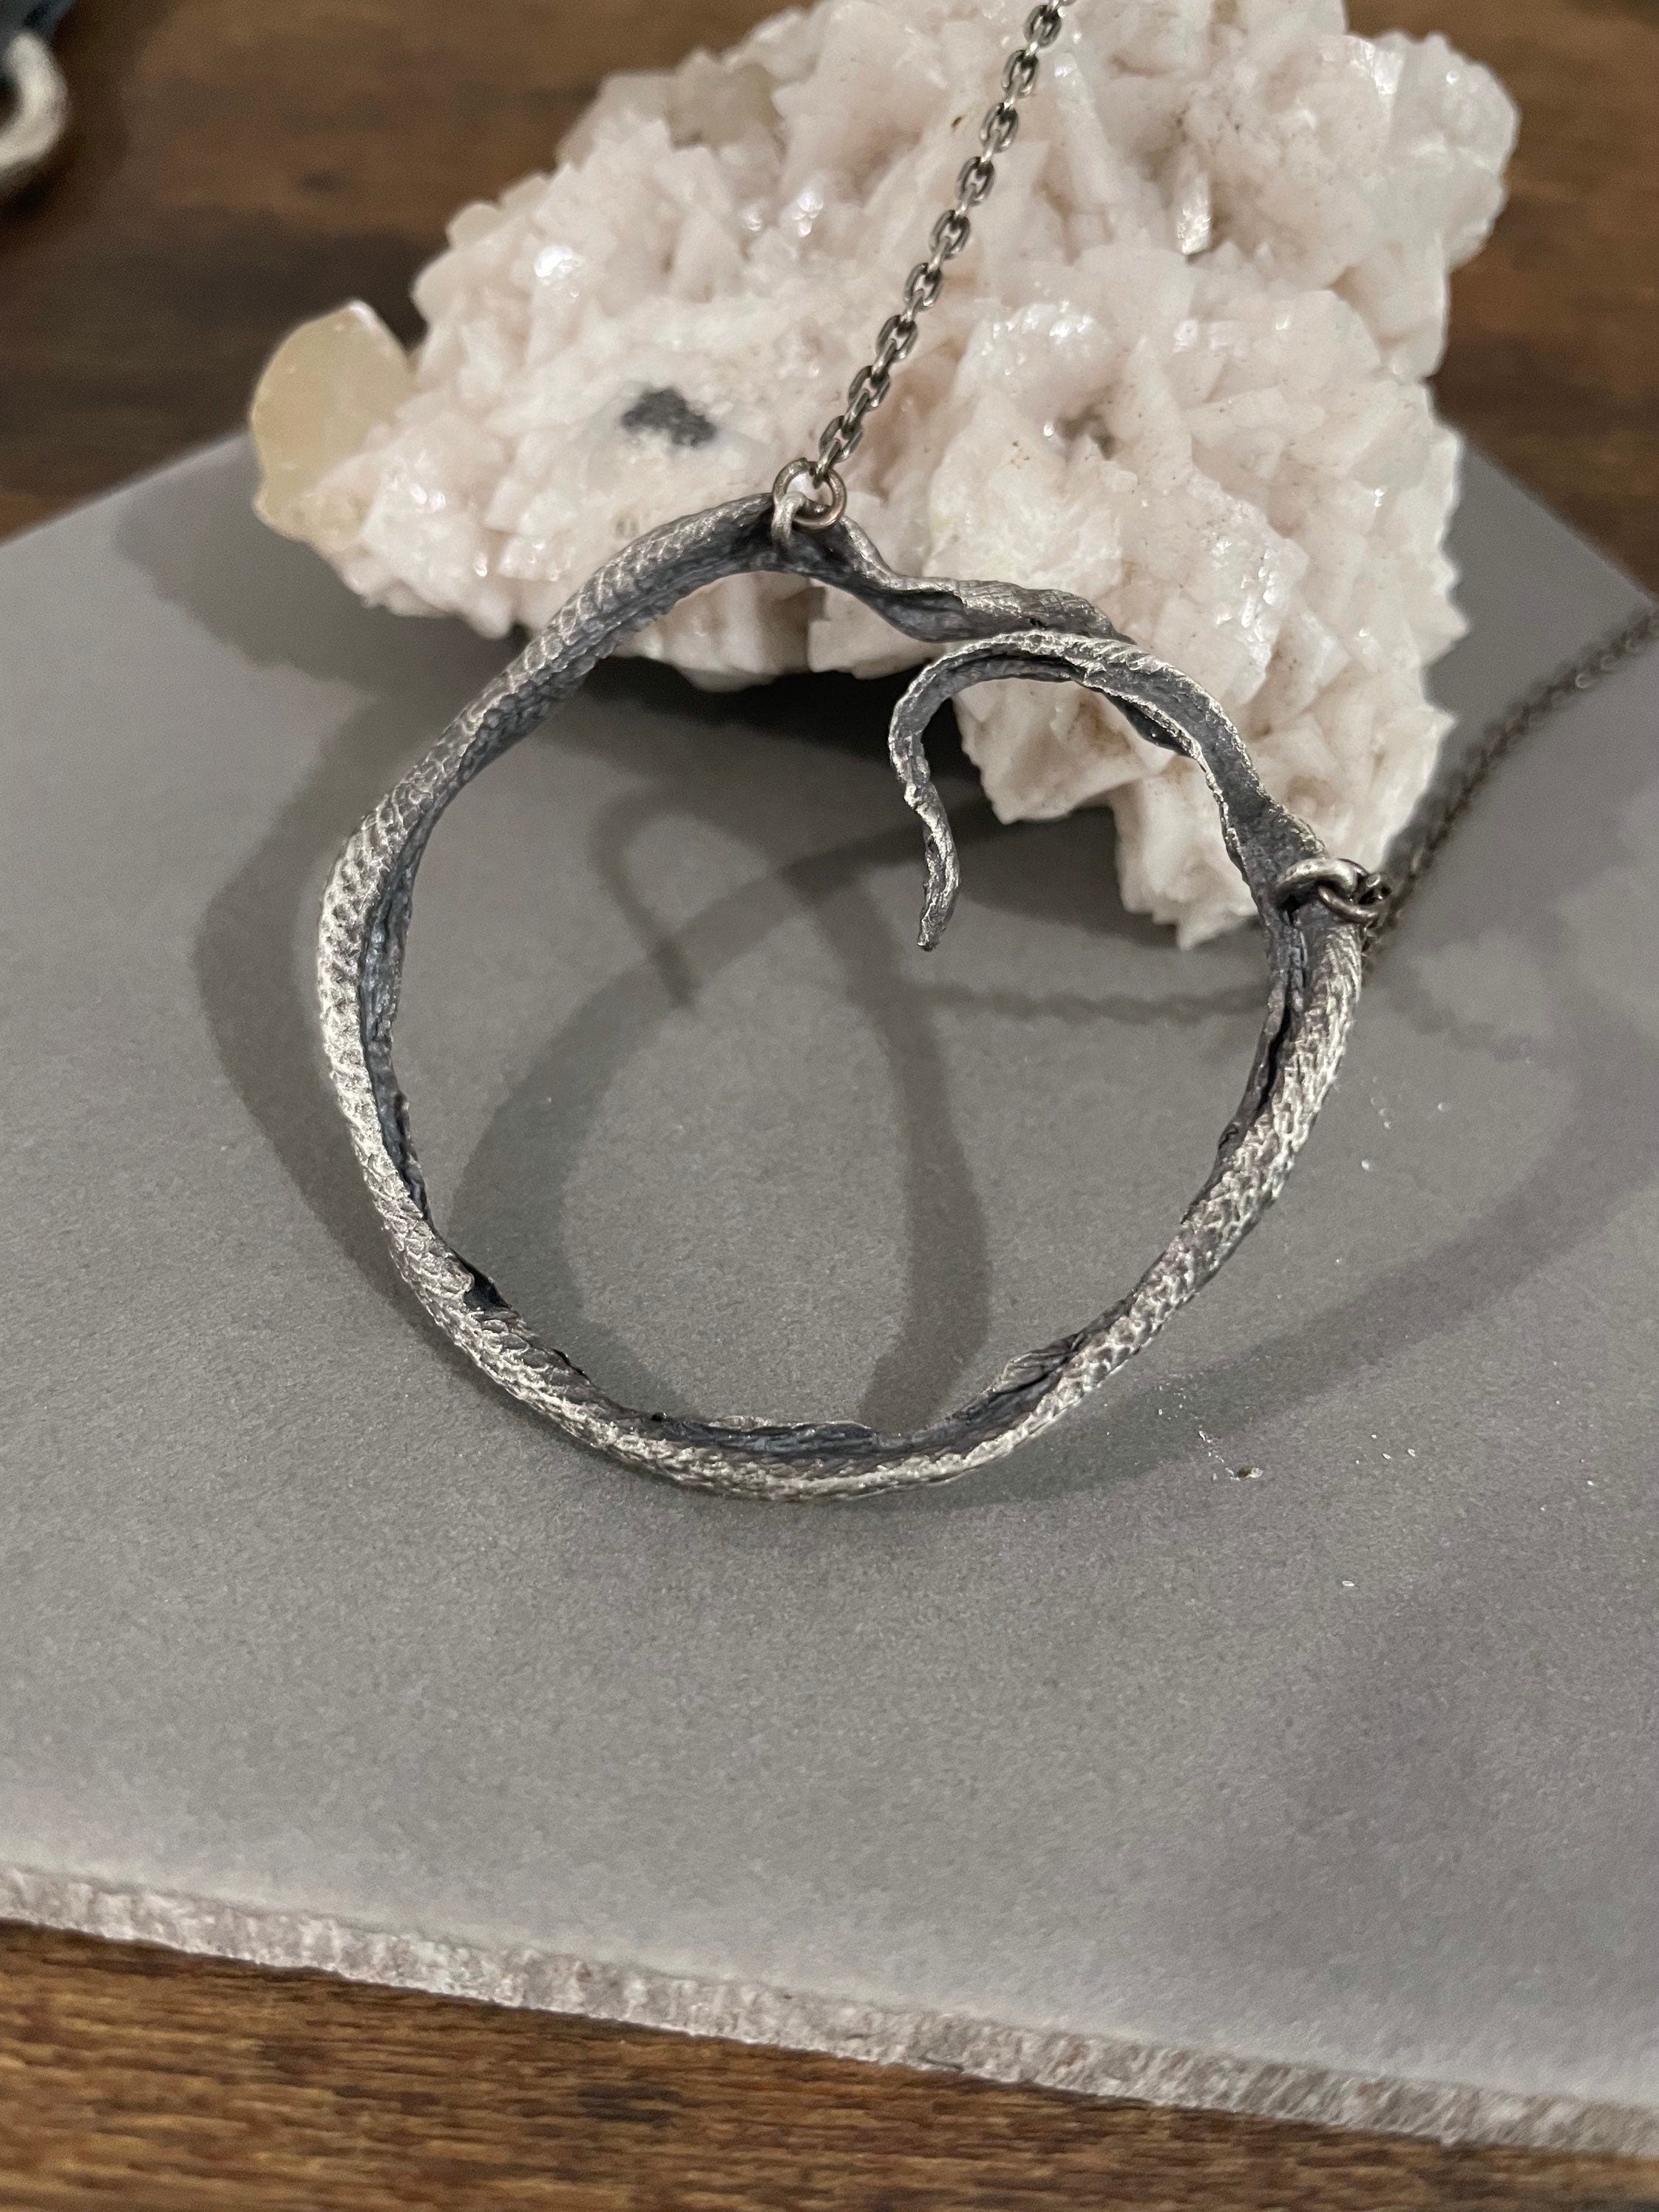 Huge Ouroboros Pendant Necklace